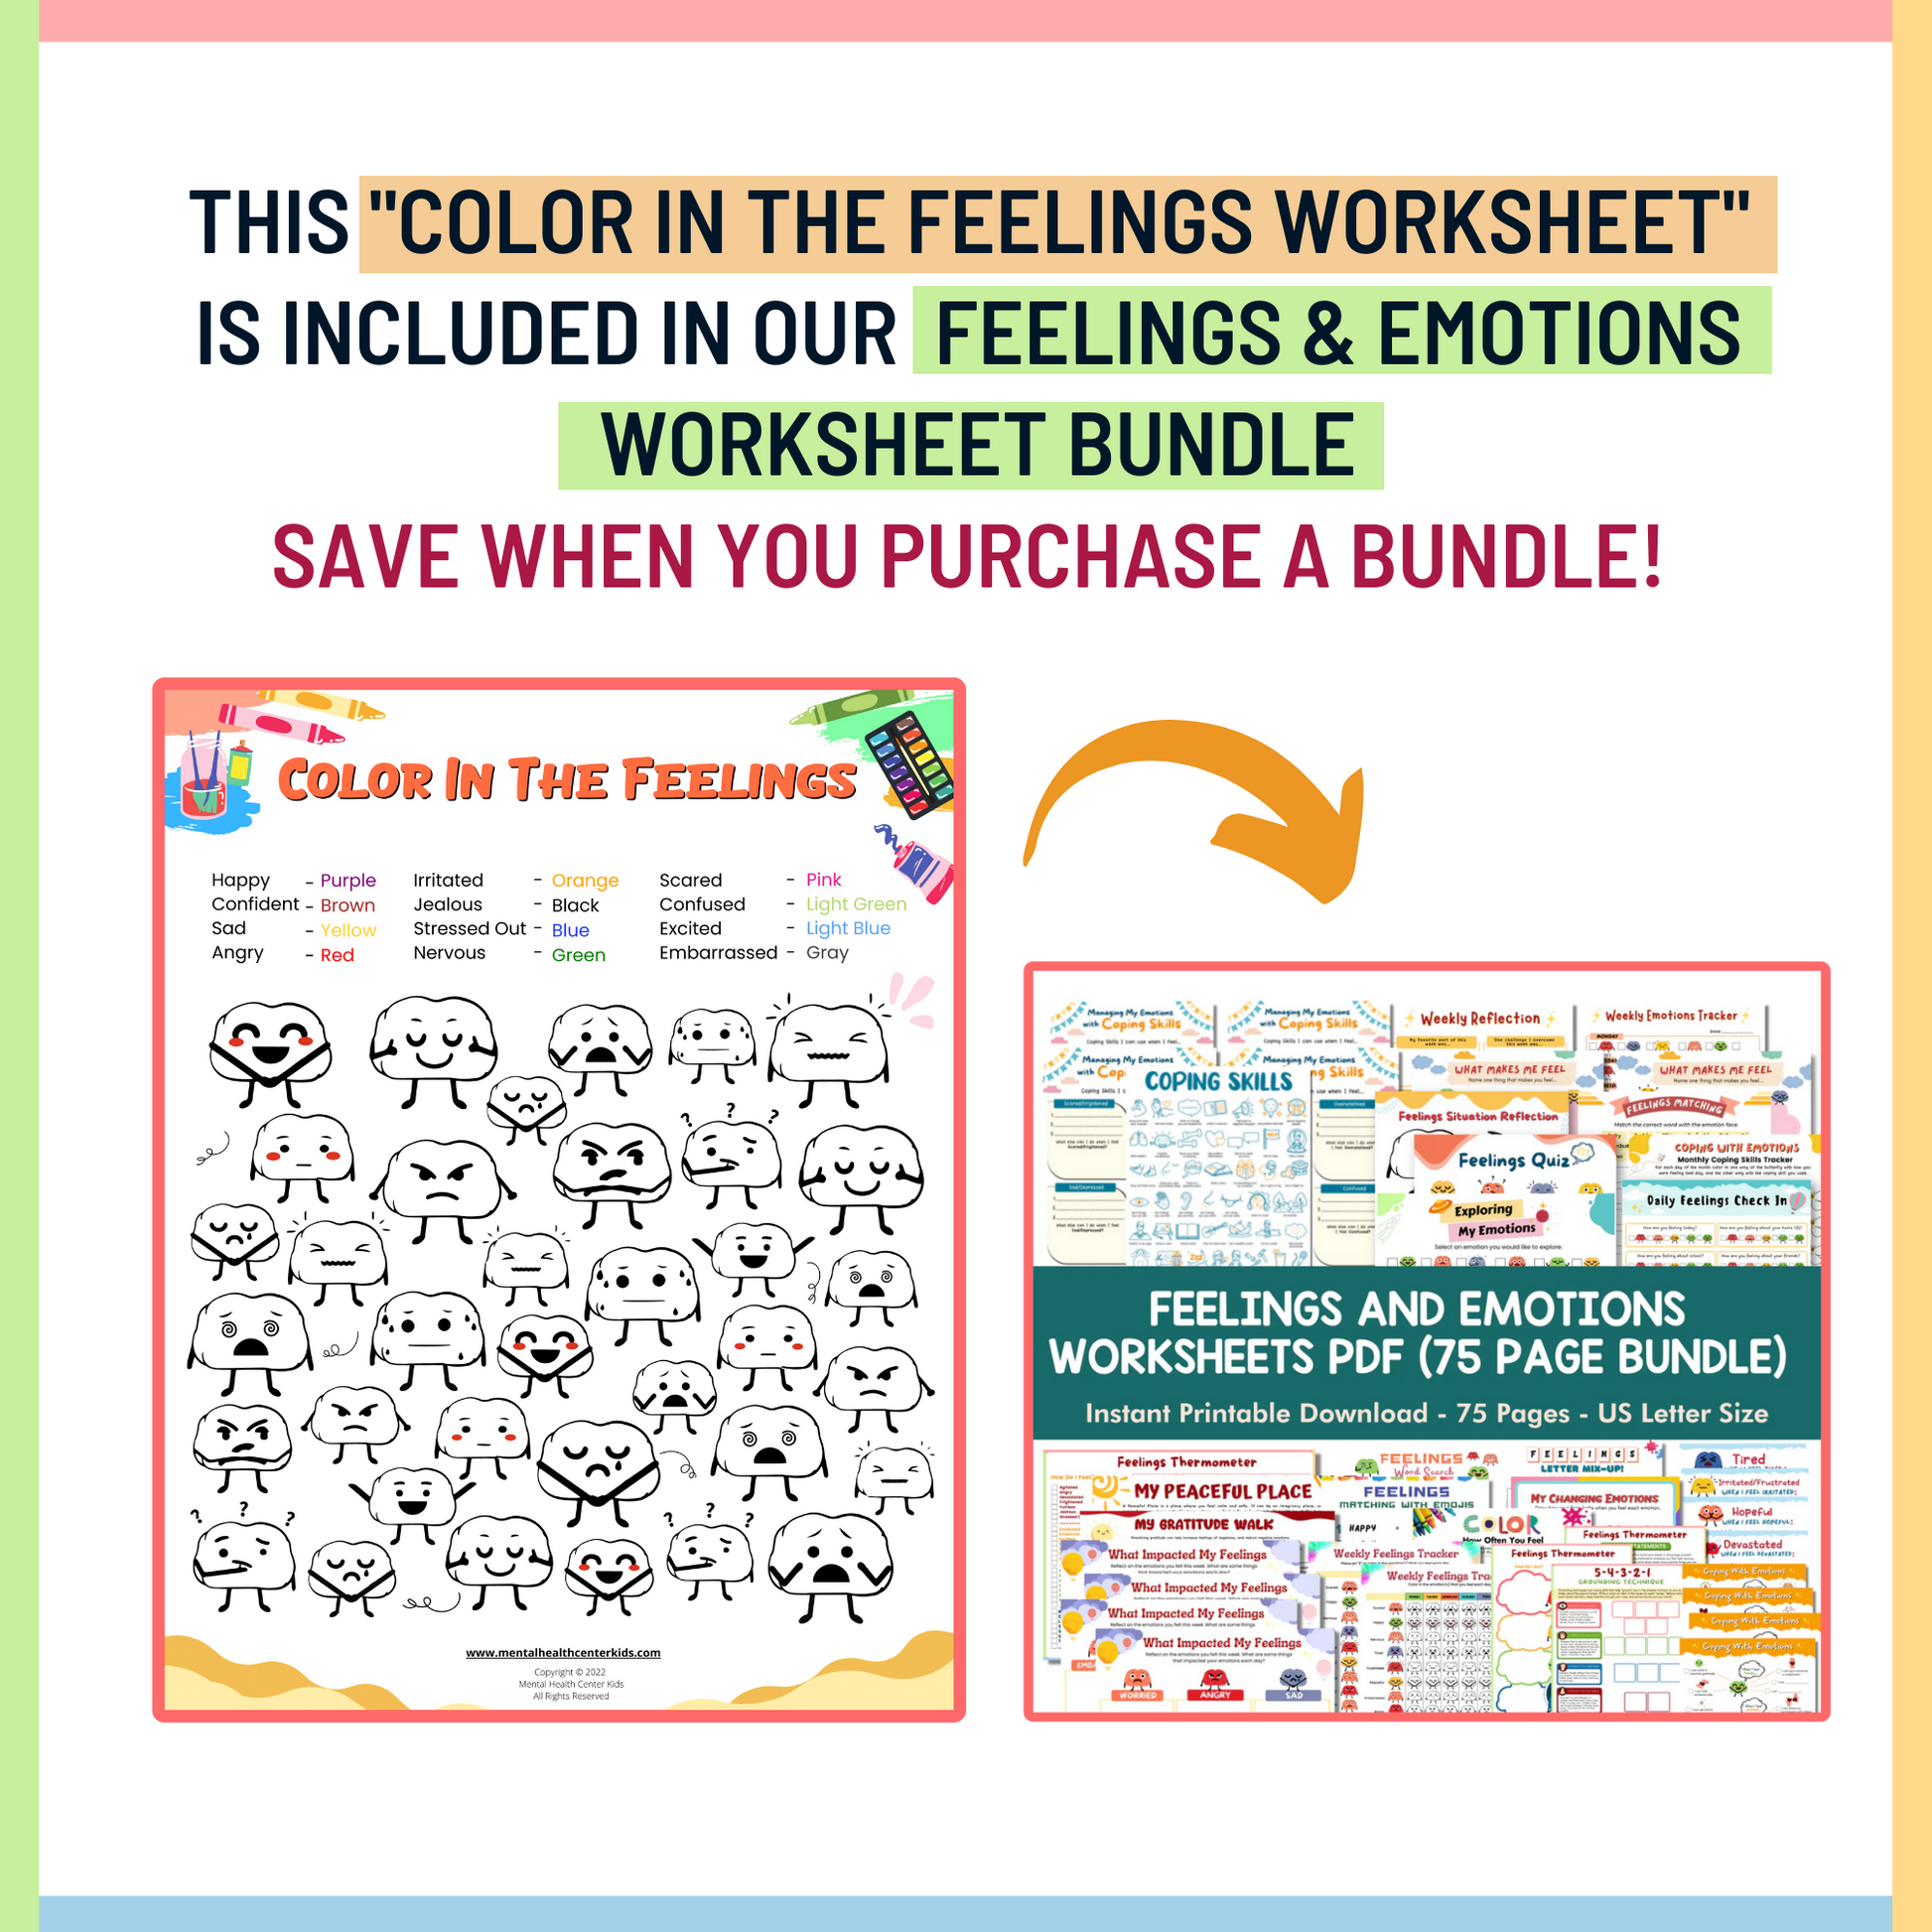 Emoji coloring page â mental health center kids